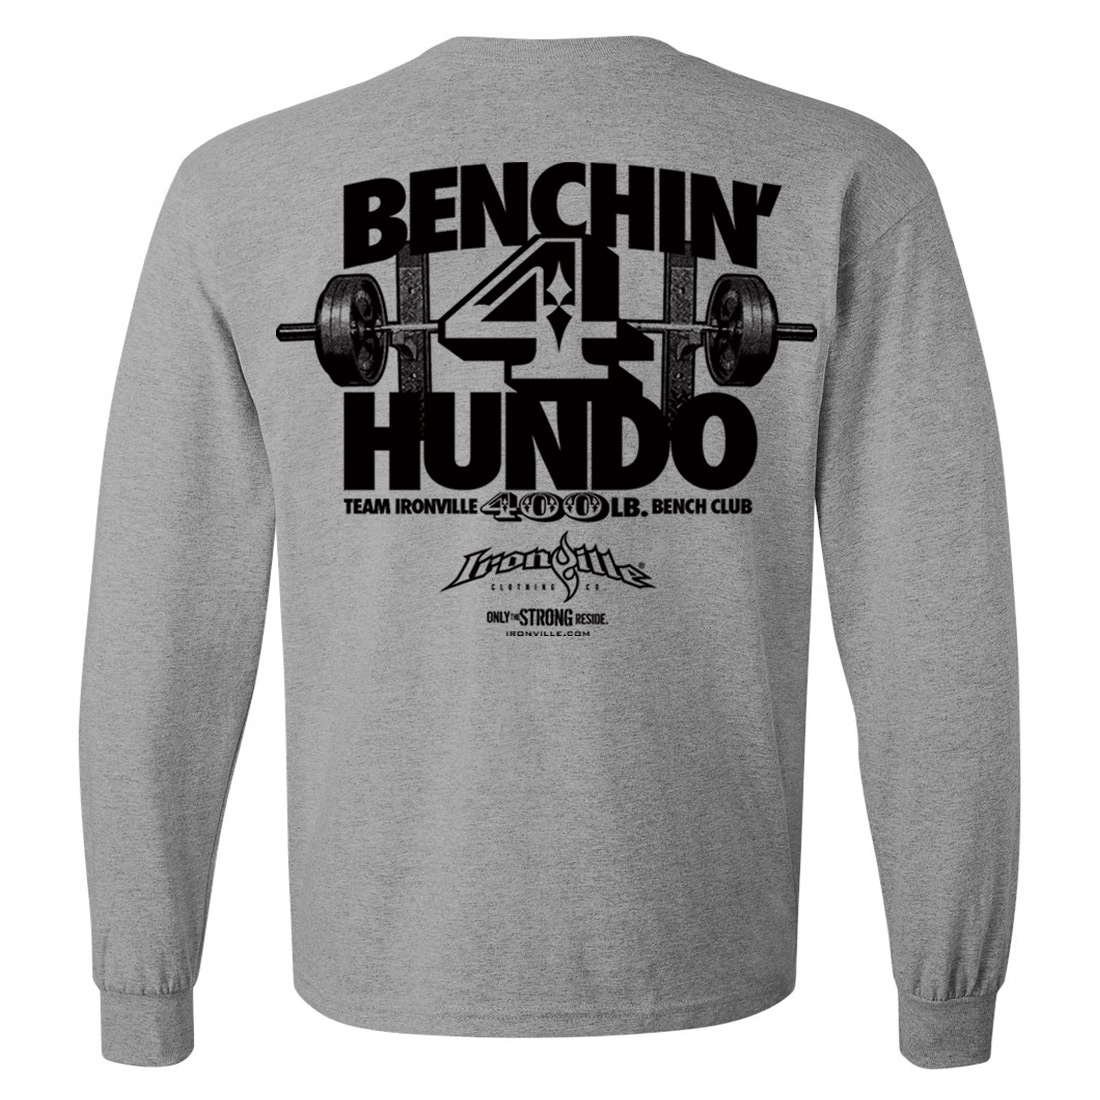 400 Pound | Press Long Clothing T-Shirt Club | Sleeve Bench Ironville